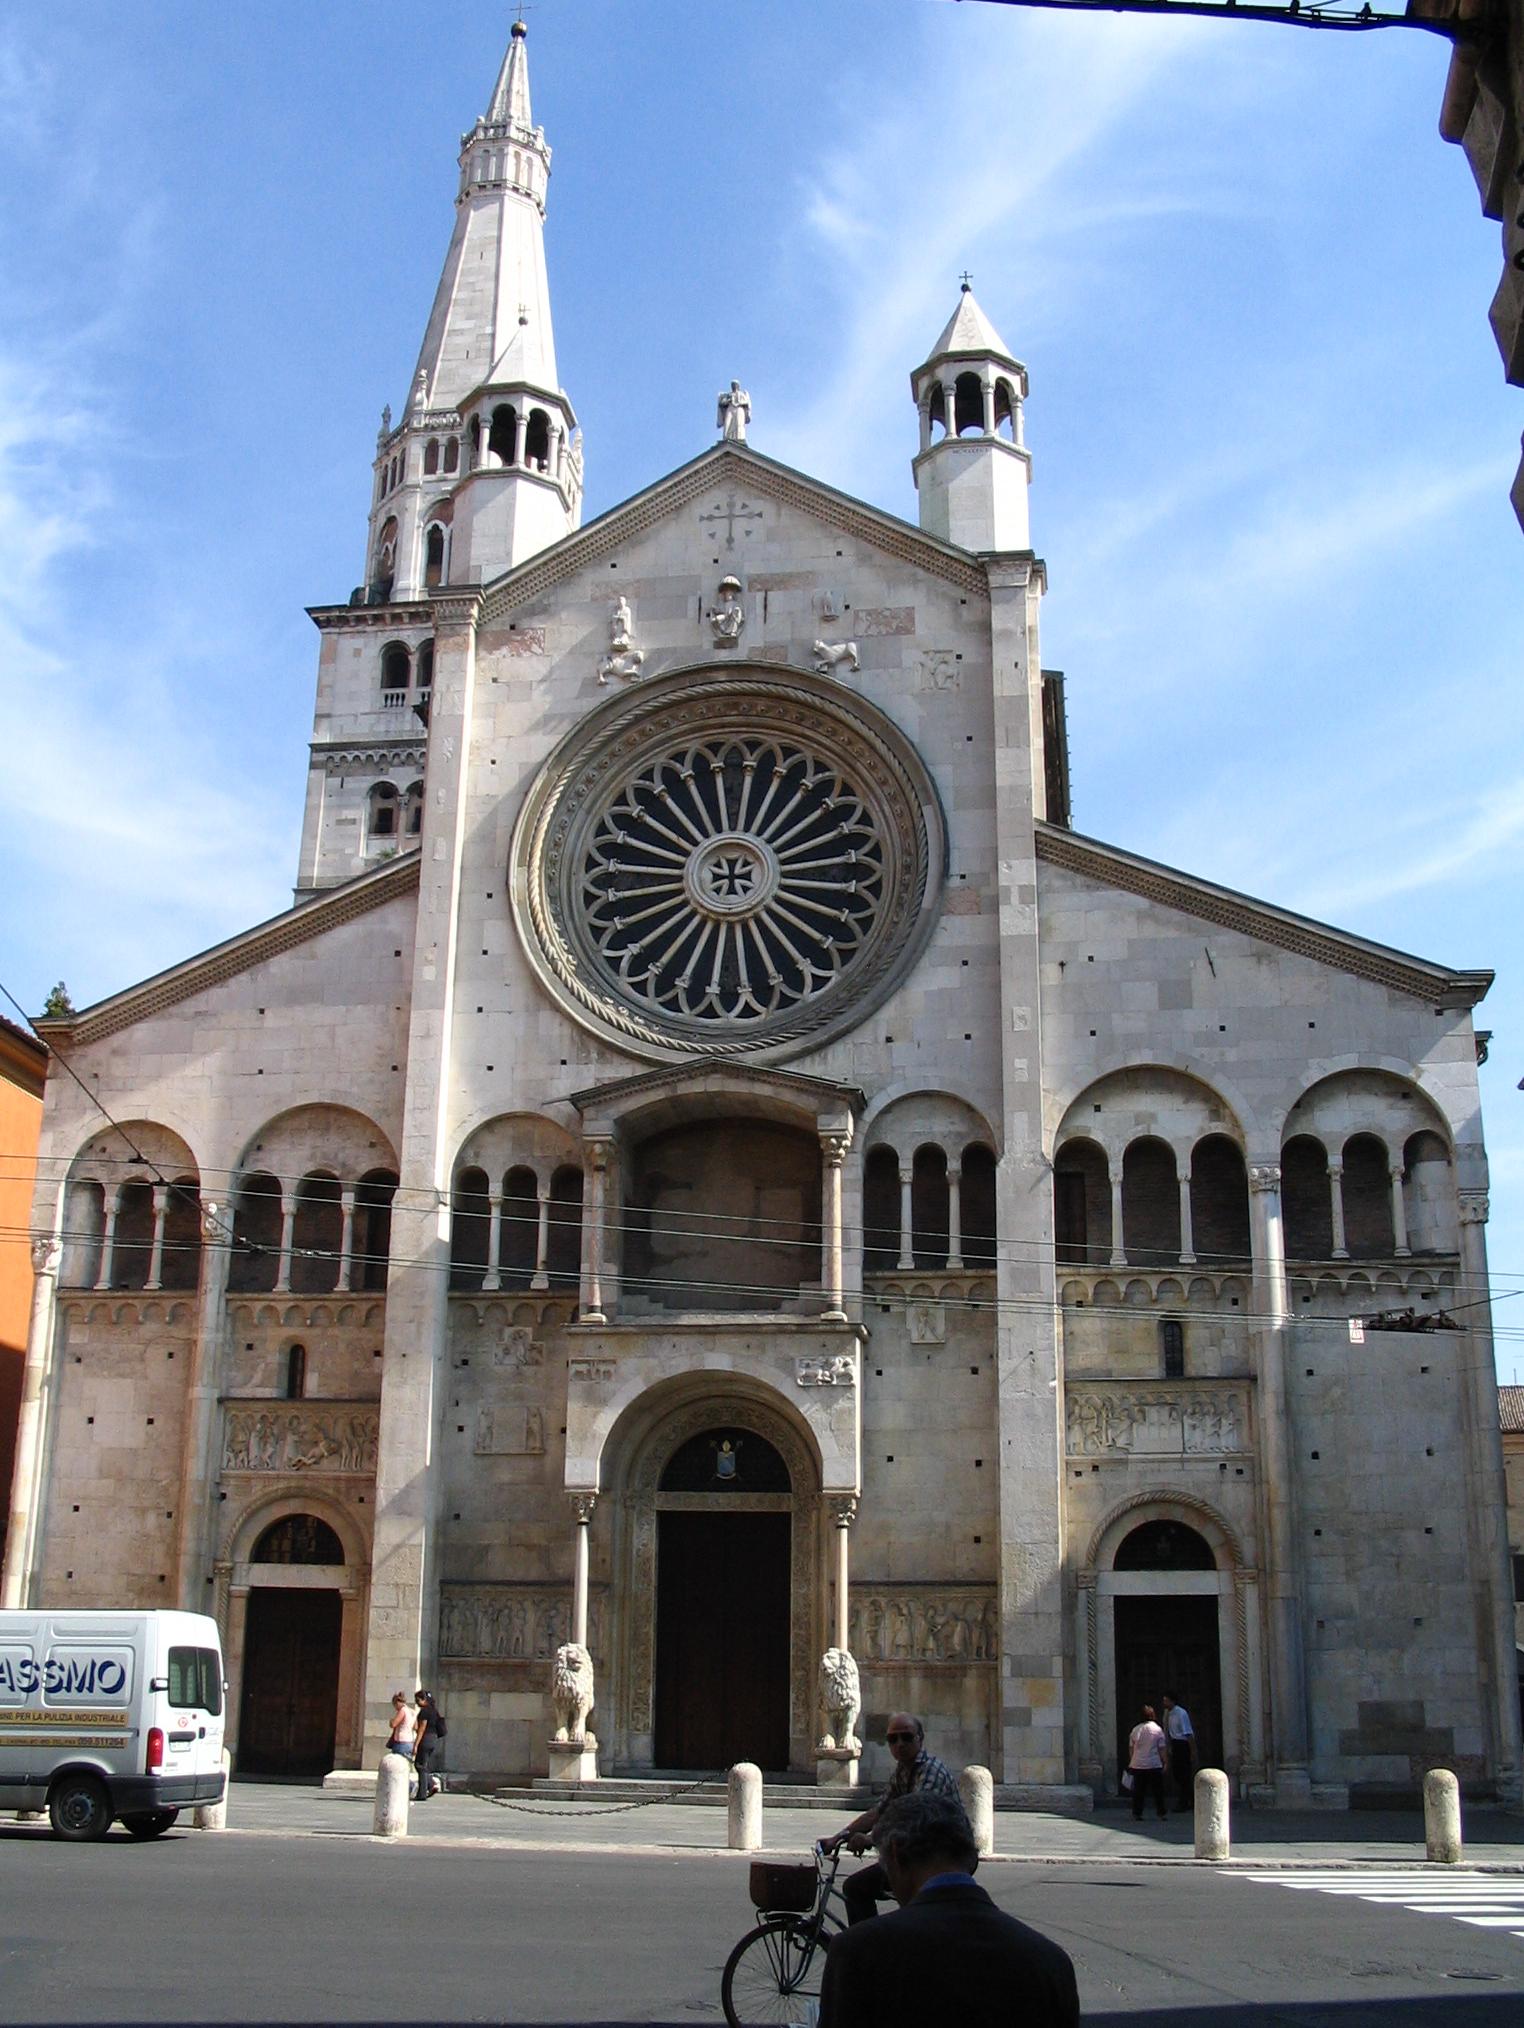 Katedrala u Modeni